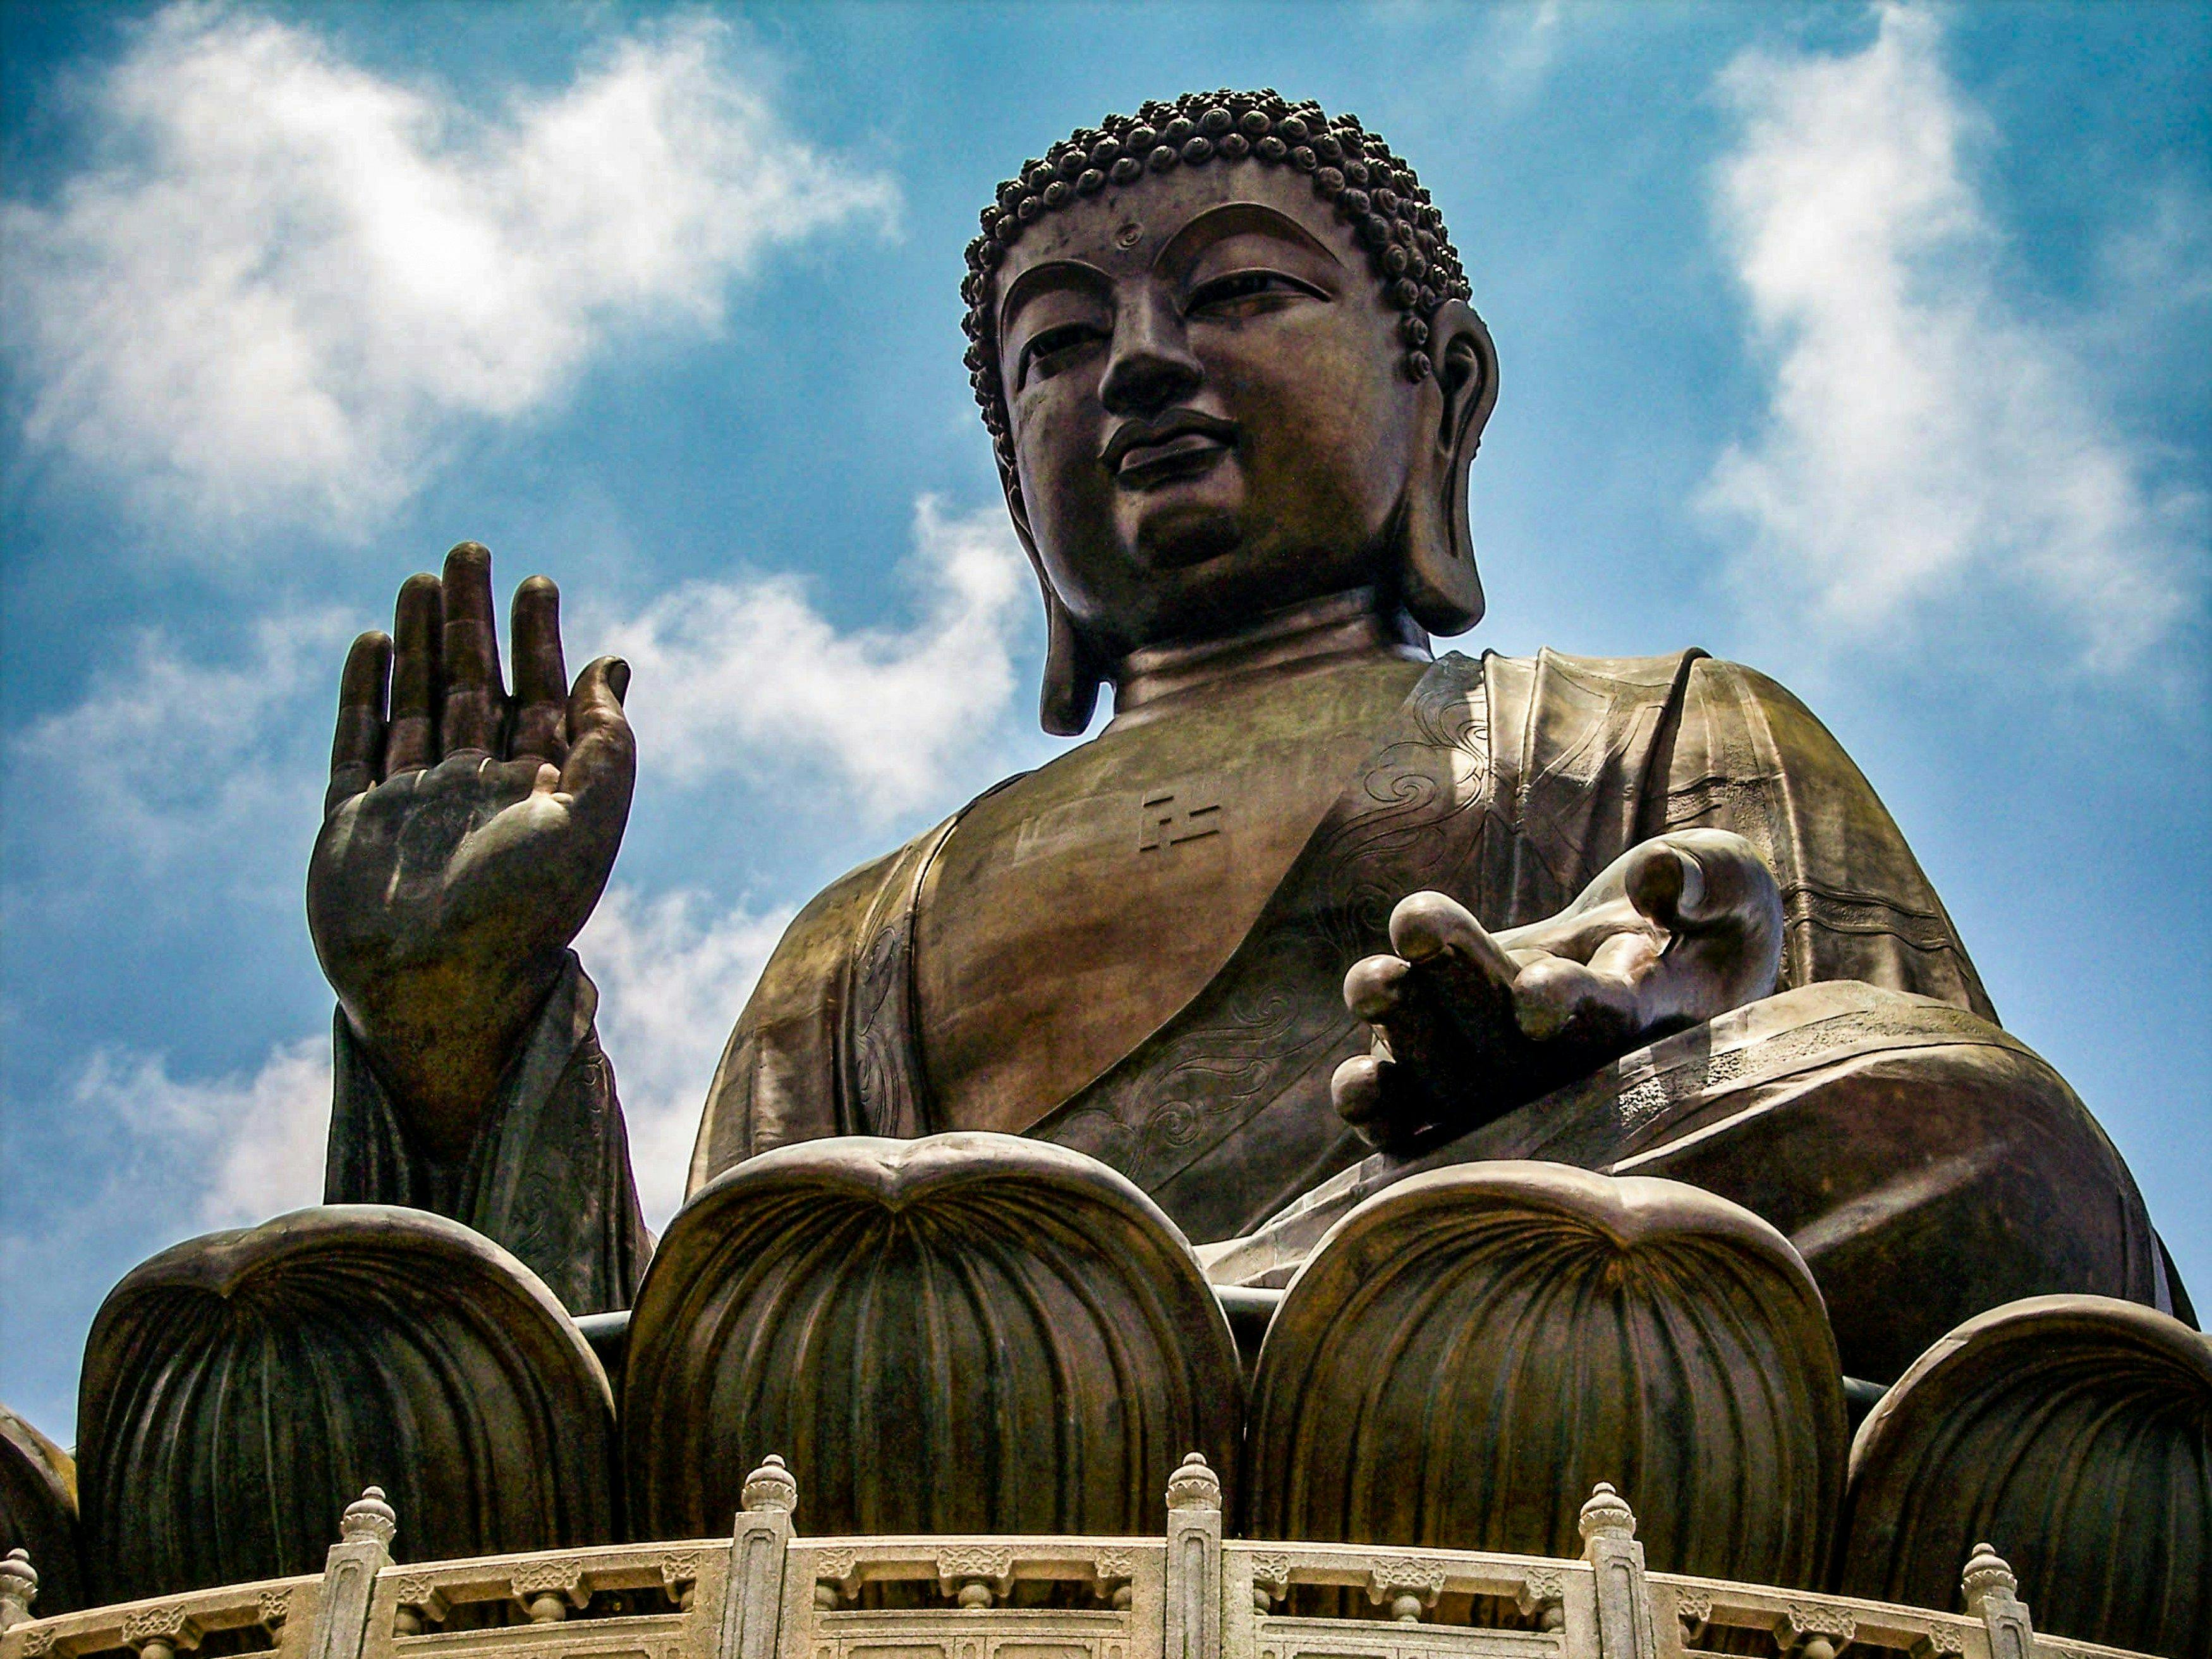 Big Buddha on Lantau Island in Hong Kong